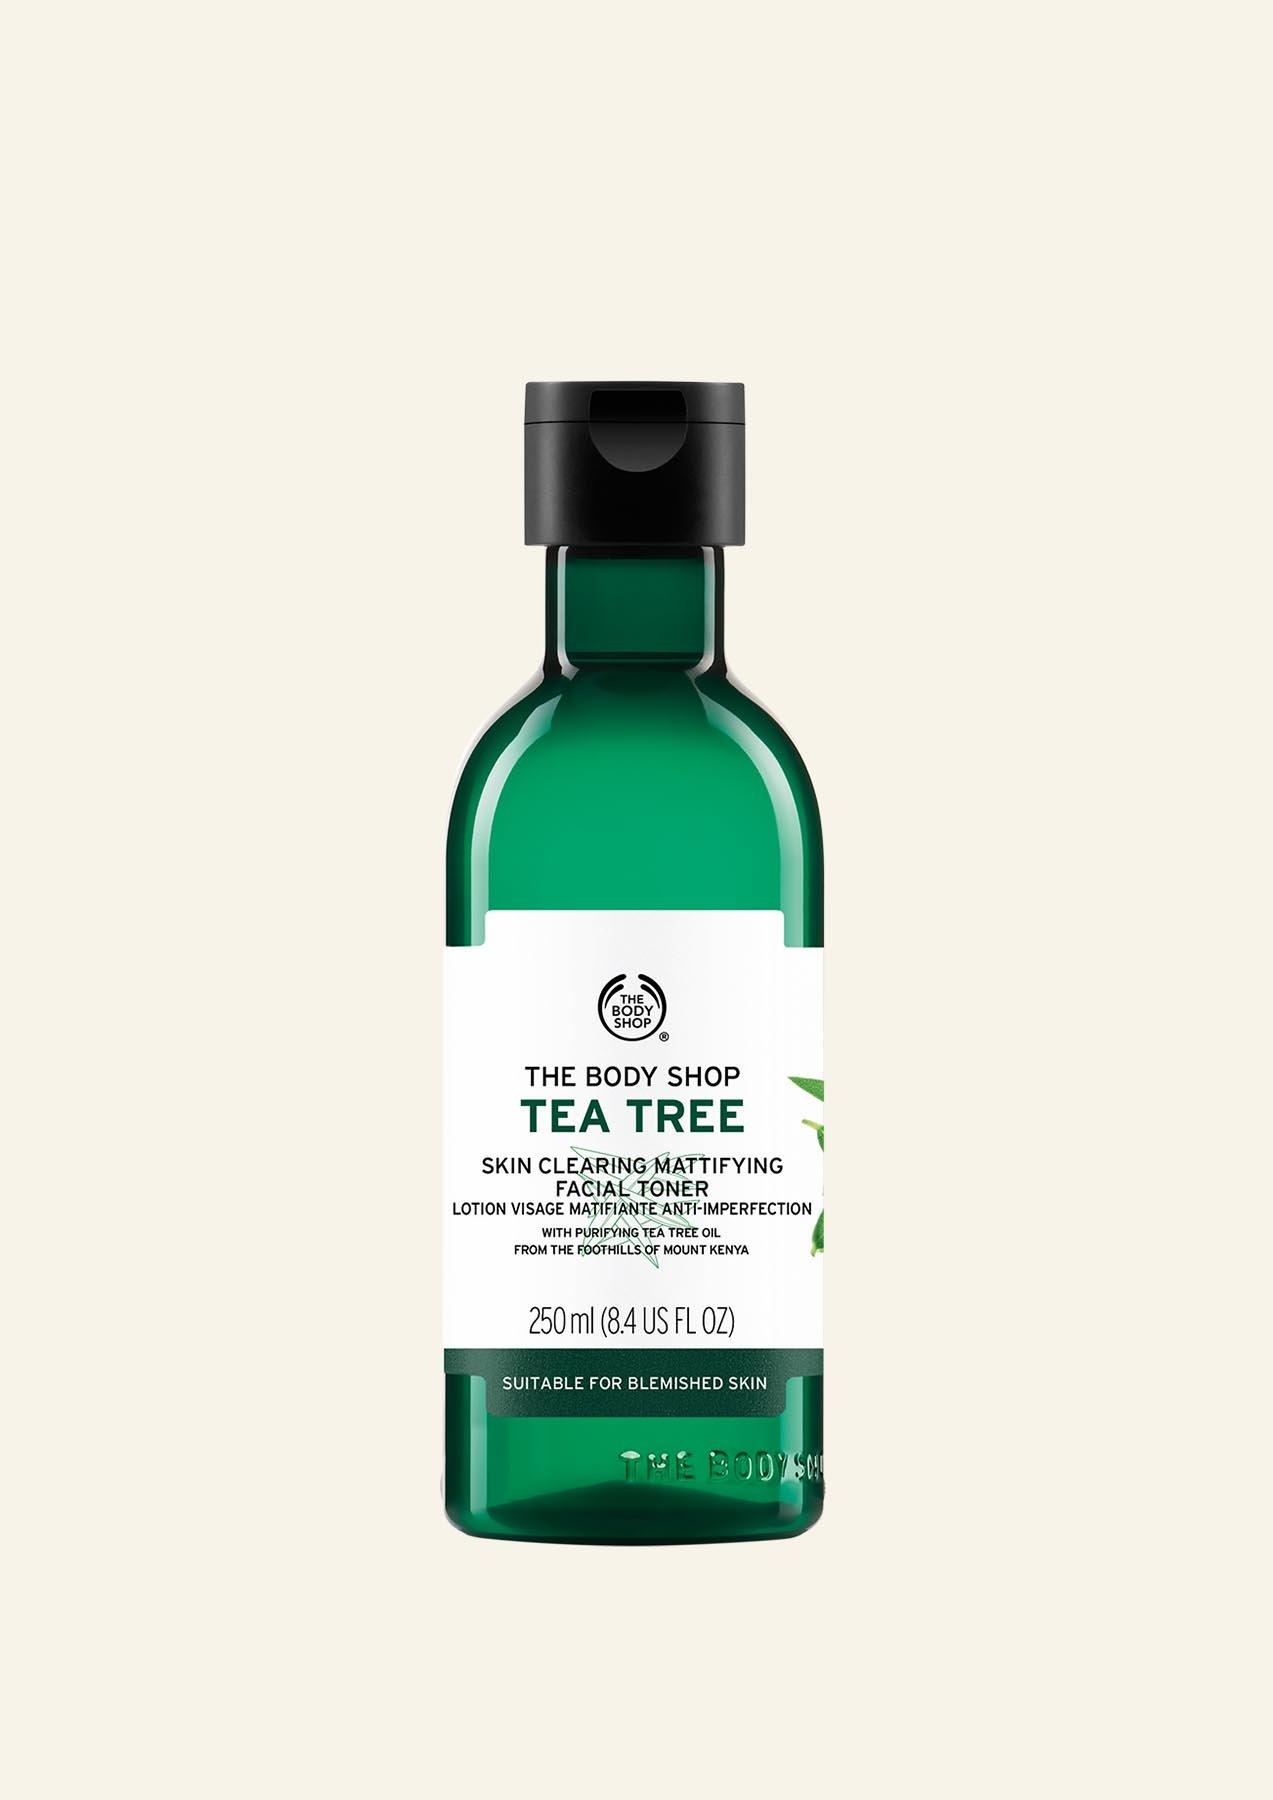 Tea Tree Toner Tea Tree Oil The Body Shop